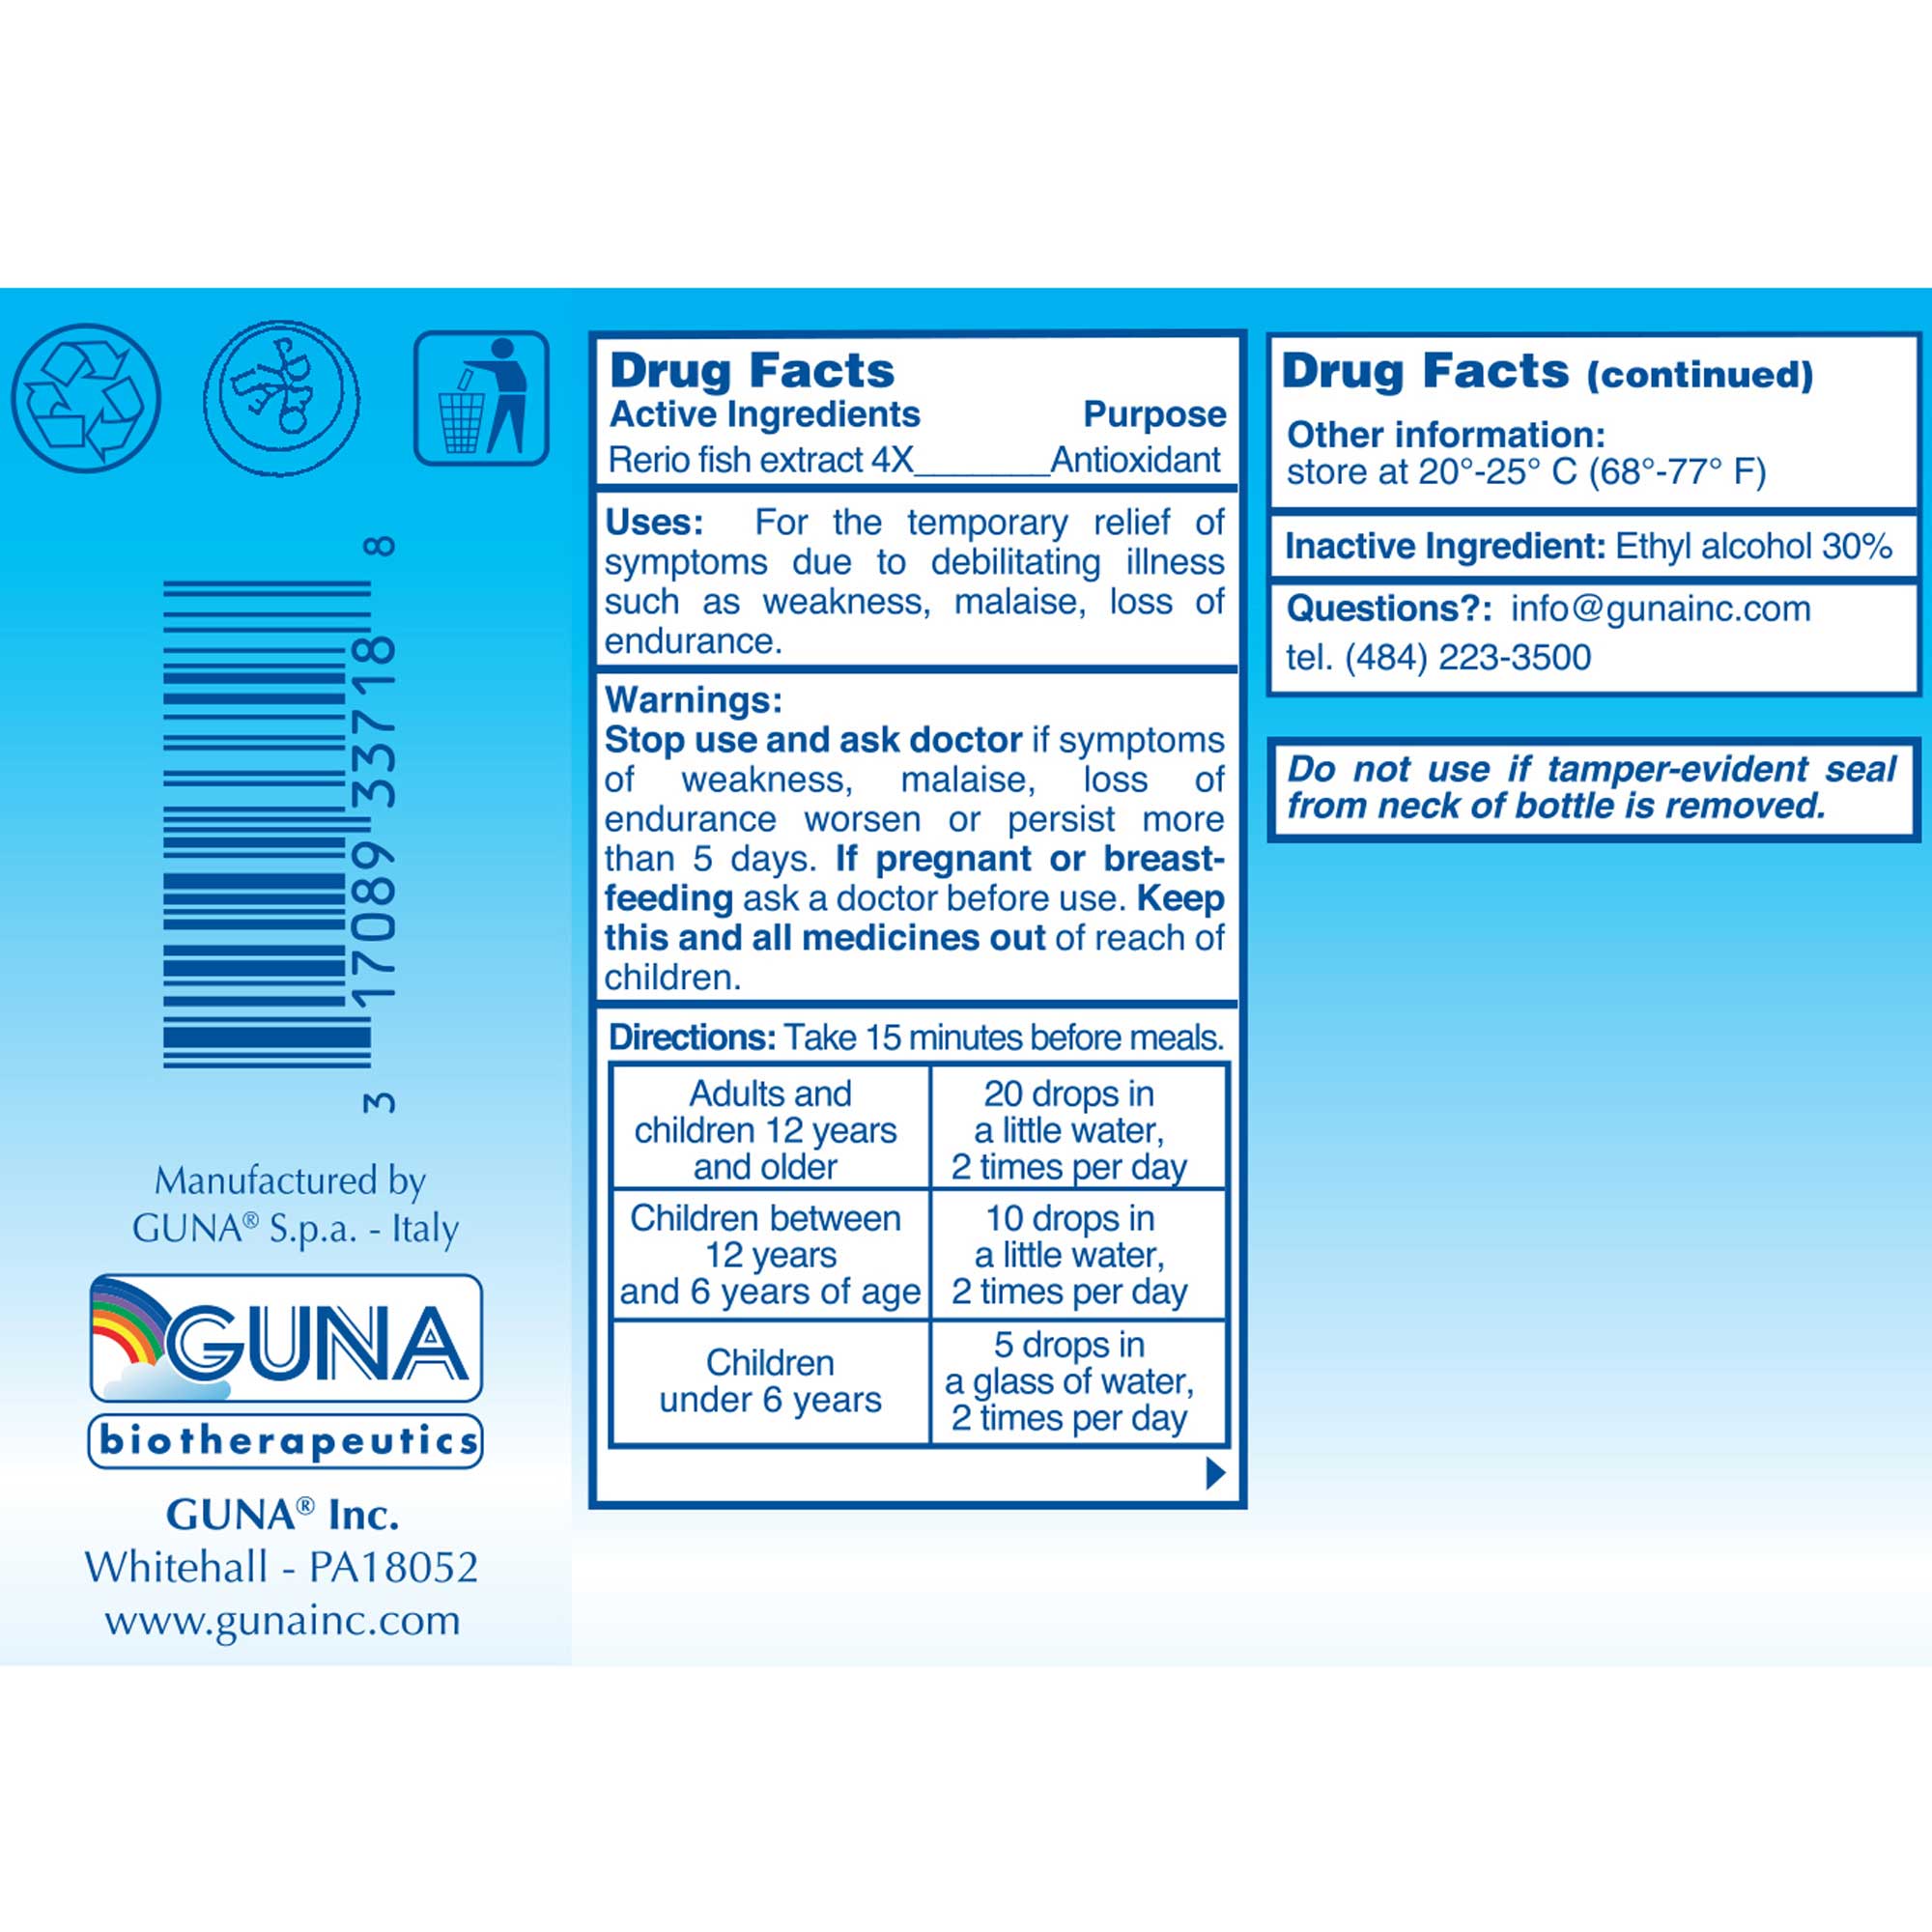 GUNA Biotherapeutics GUNA-Rerio Ingredients